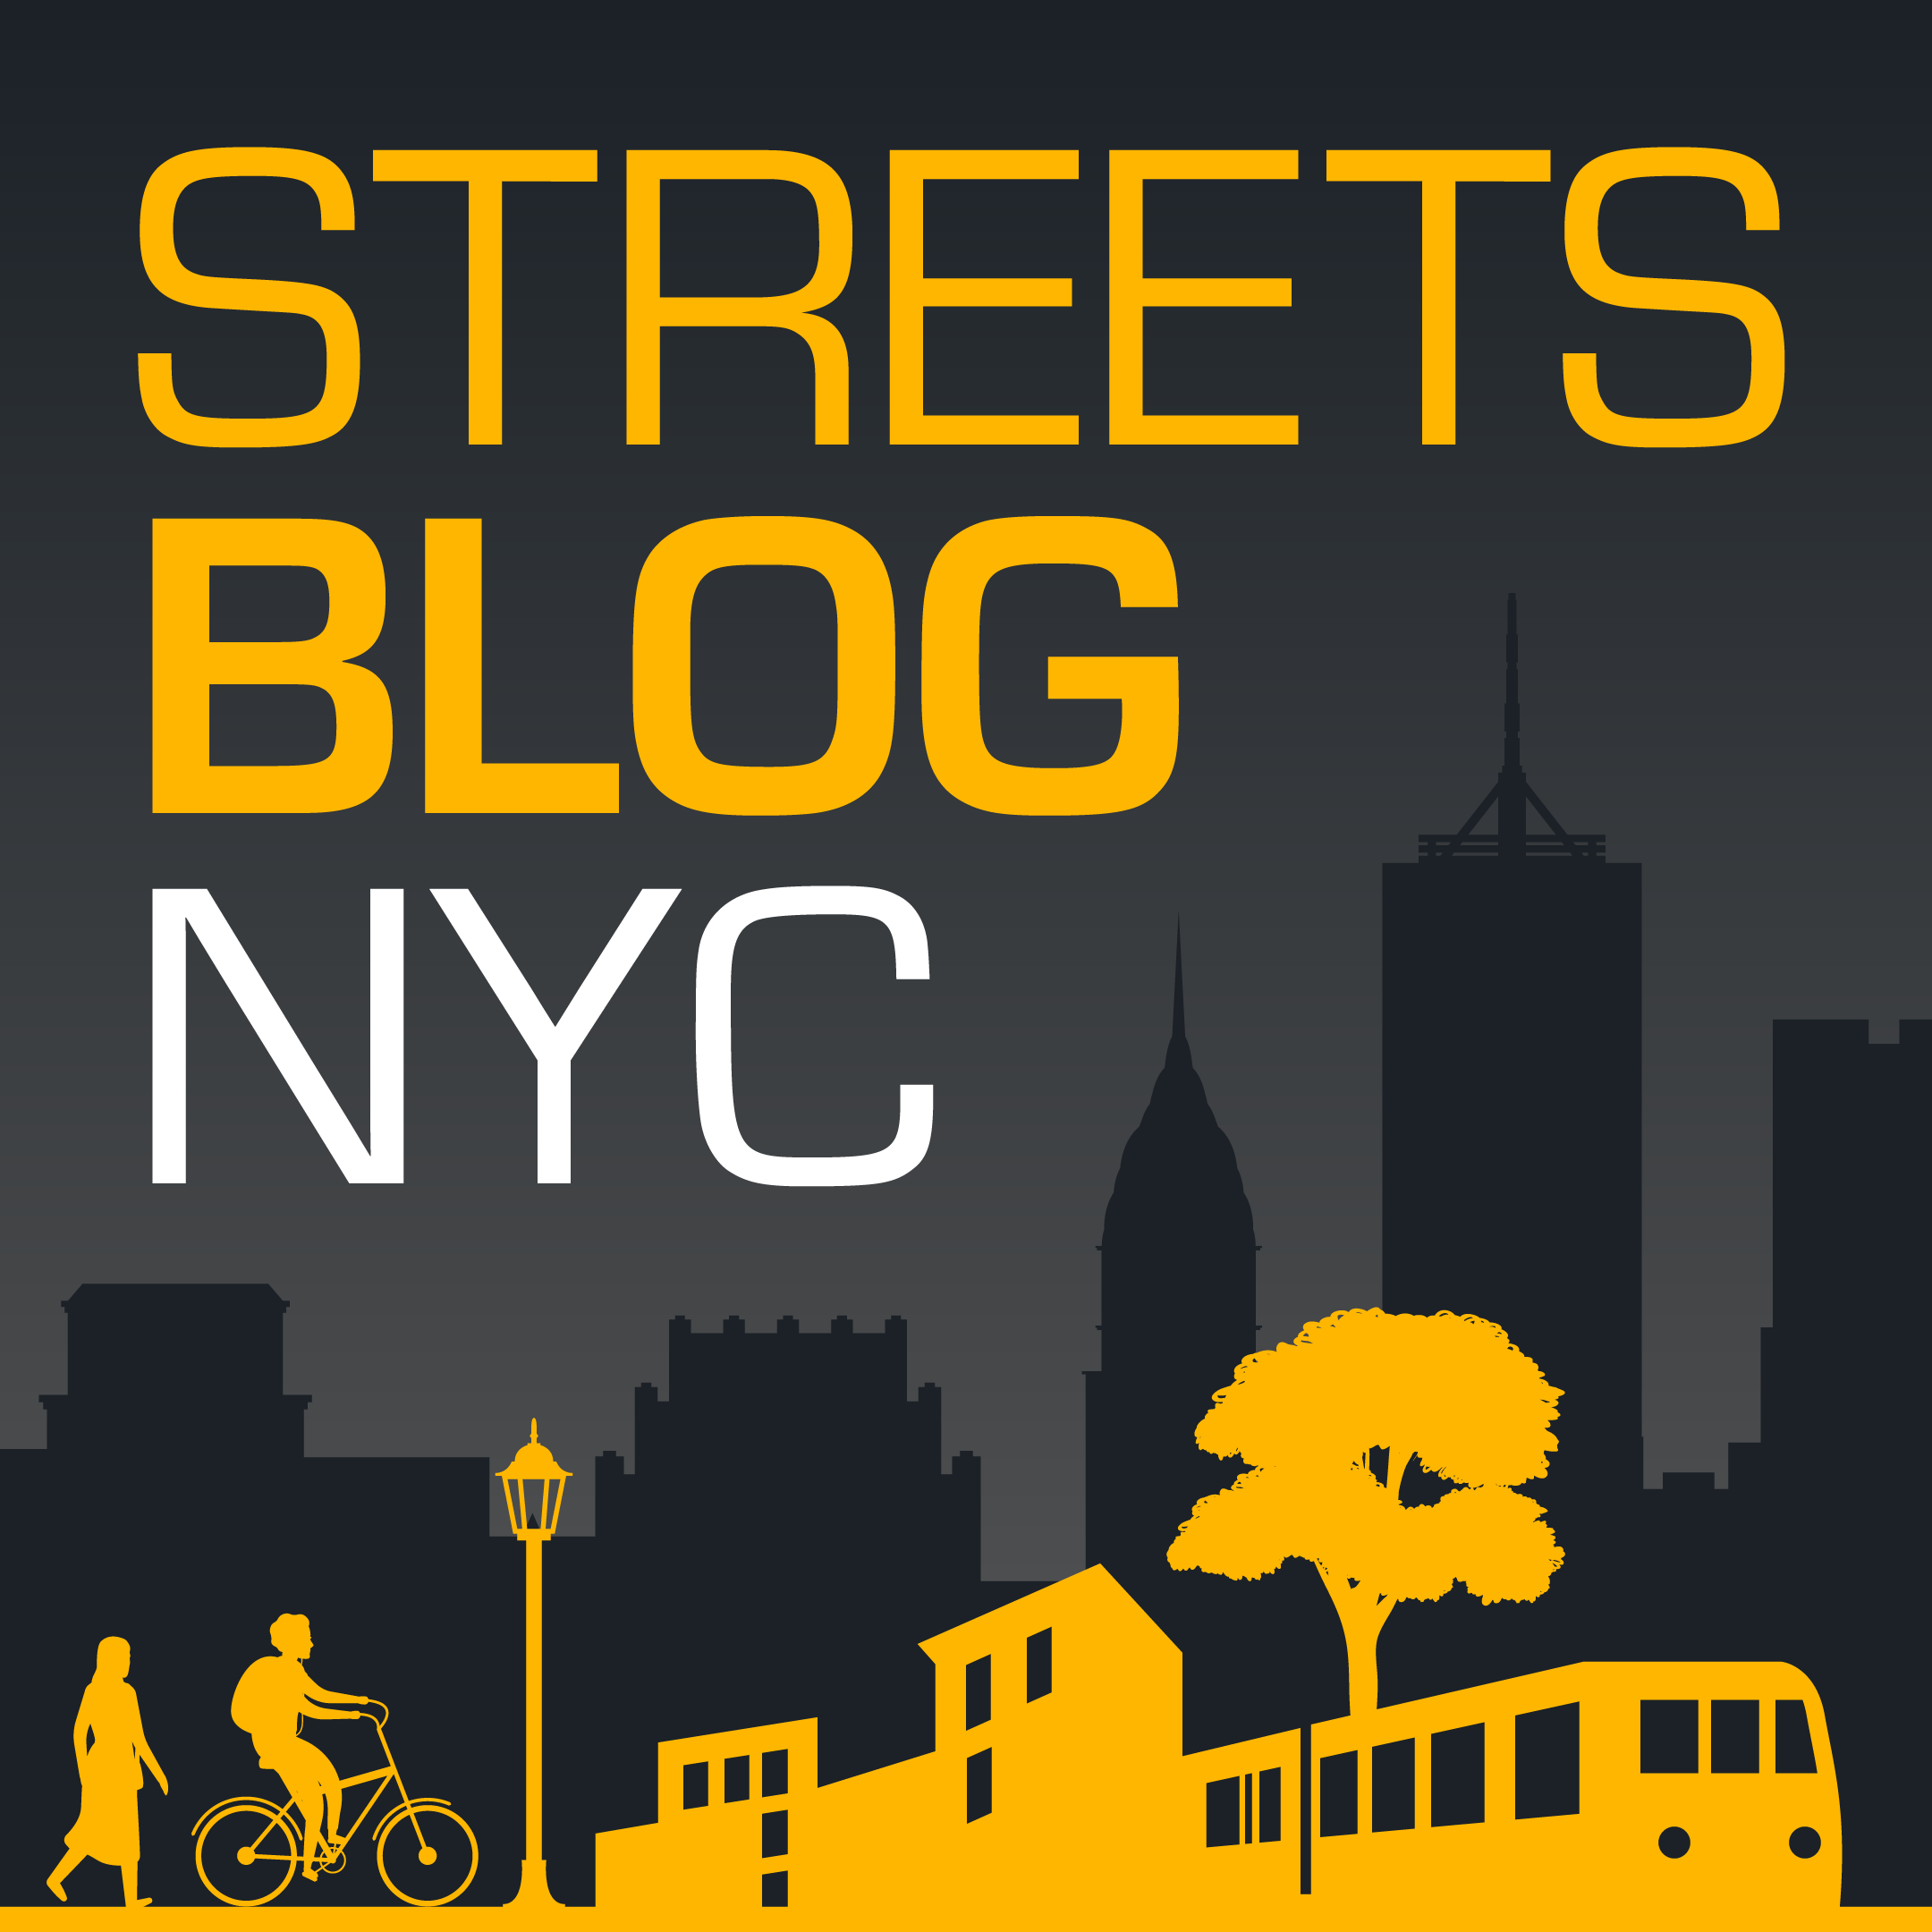 Streetsblog NYC